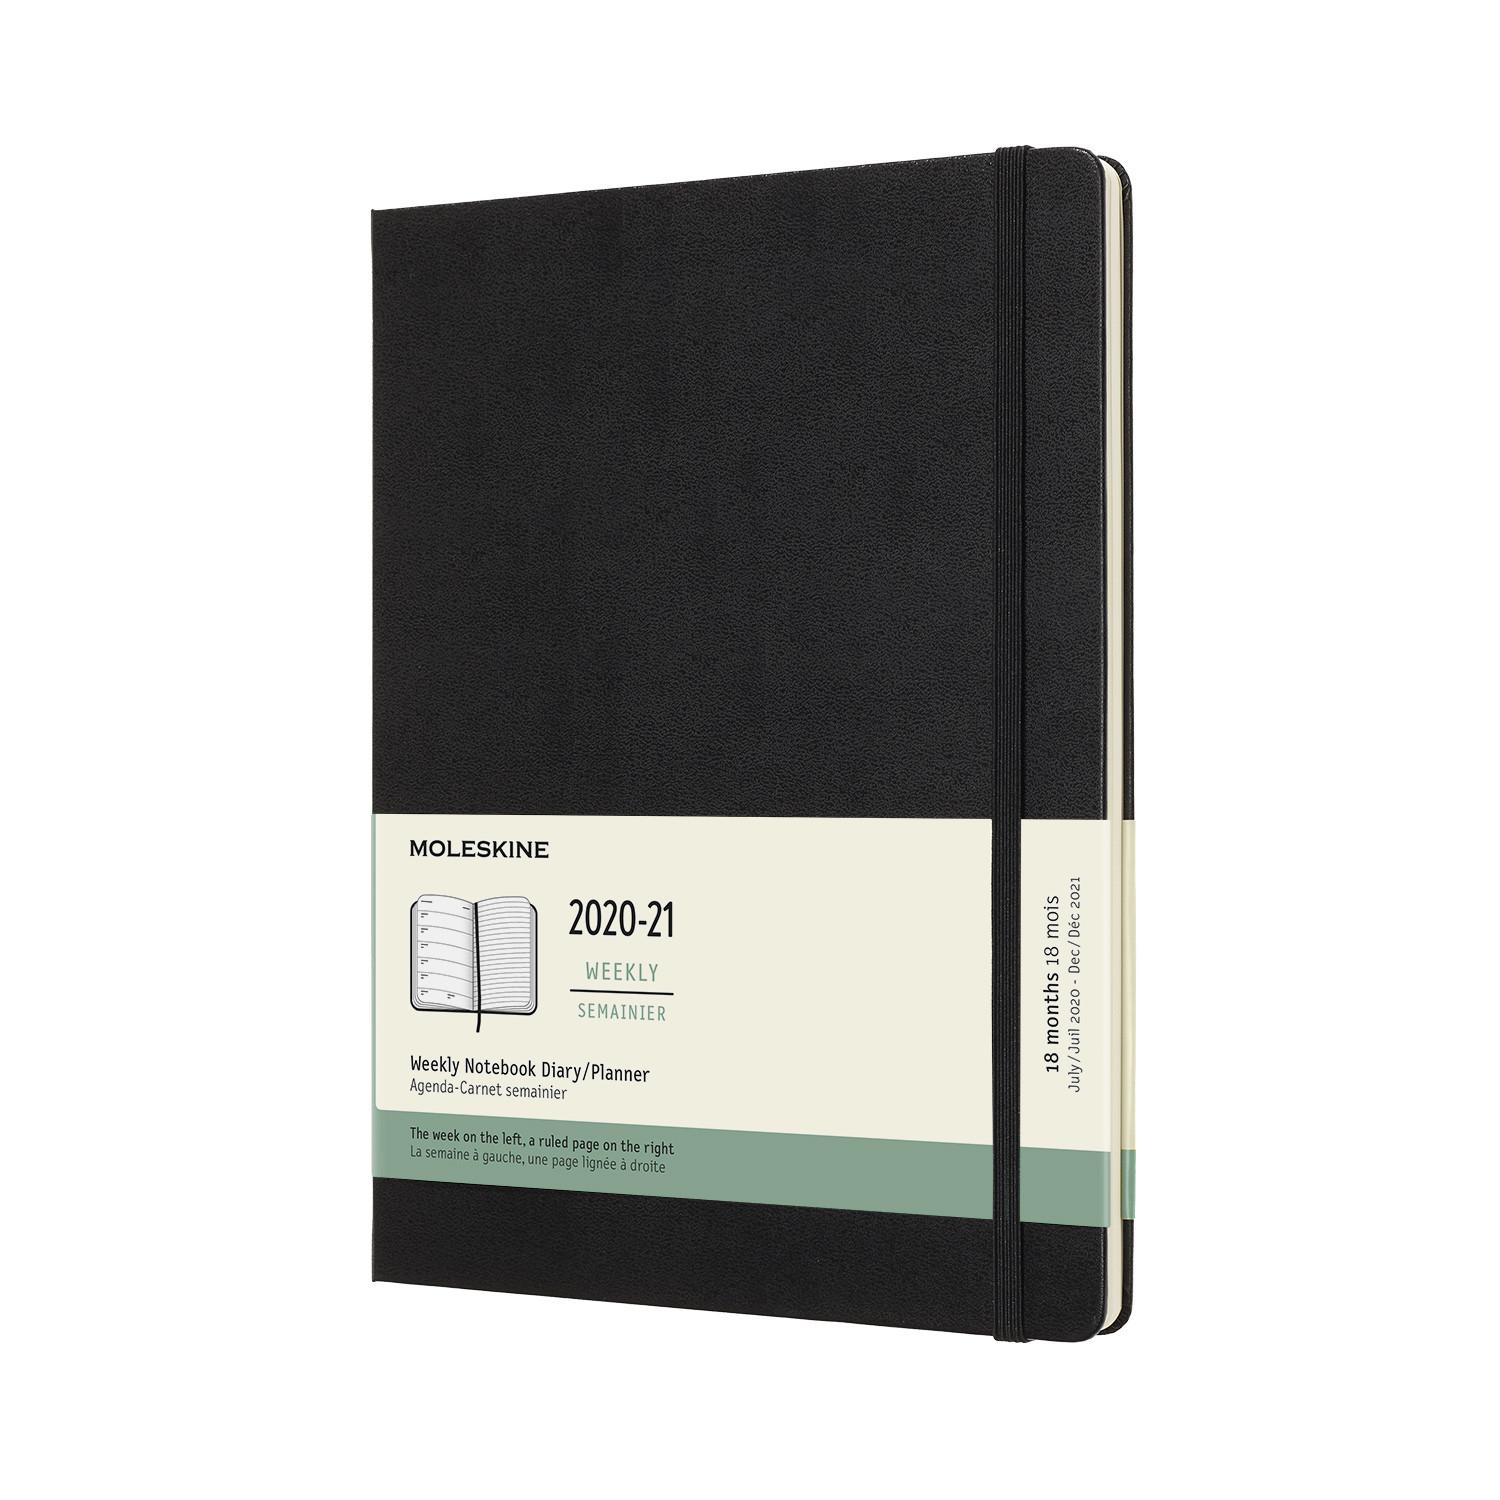 Moleskine 2020-21 18M Weekly Notebook Xlarge Black HARD COVER